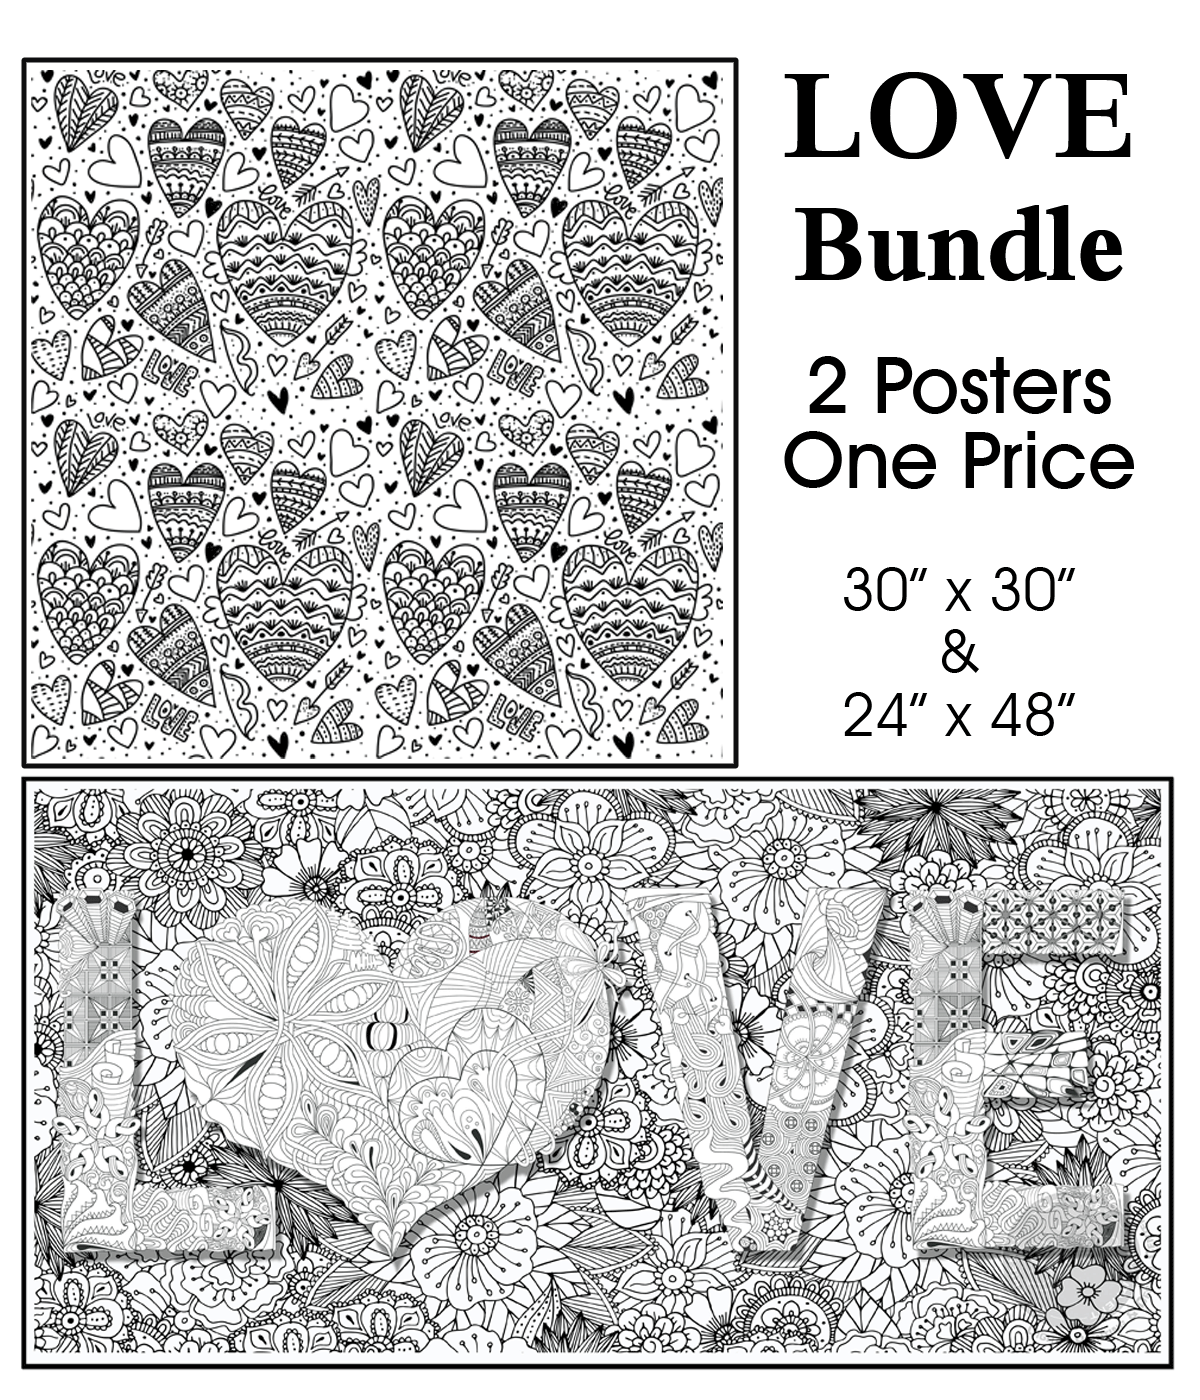 LOVE - Bundle of 2 Posters for $50 - SJPrinter 